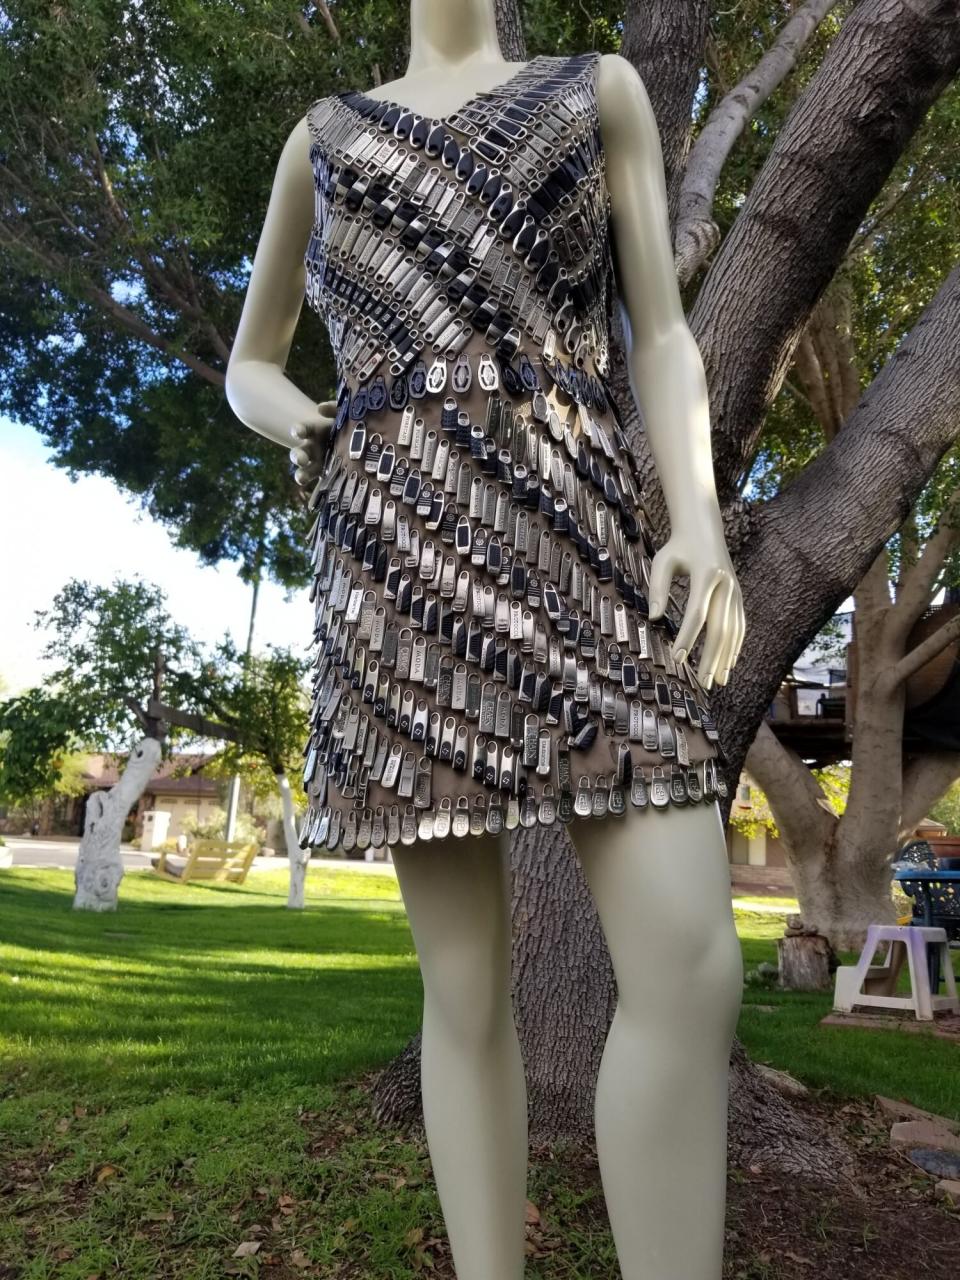 Dress made of zippers